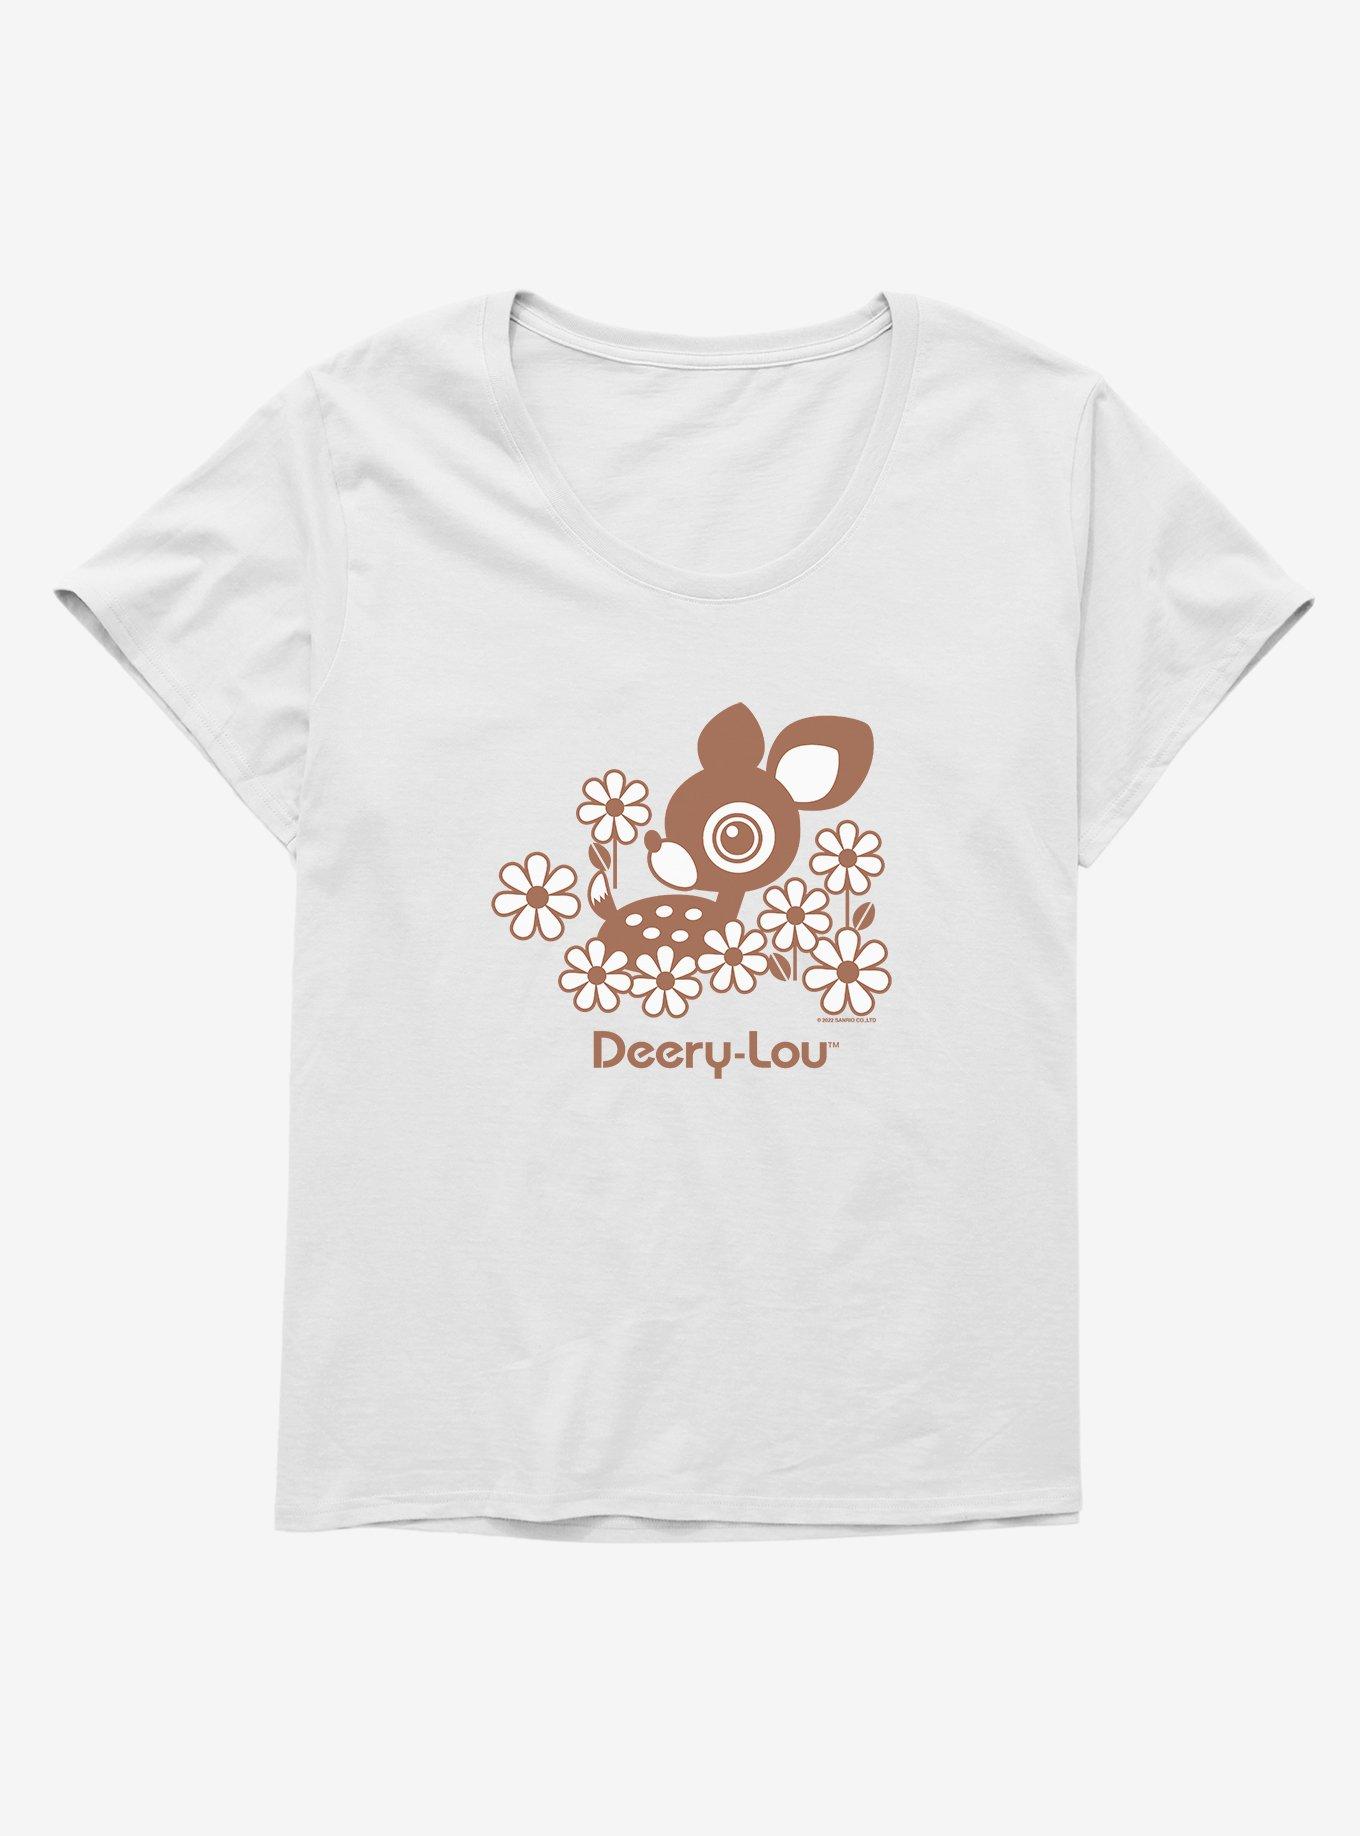 Deery-Lou Floral Design Girls T-Shirt Plus